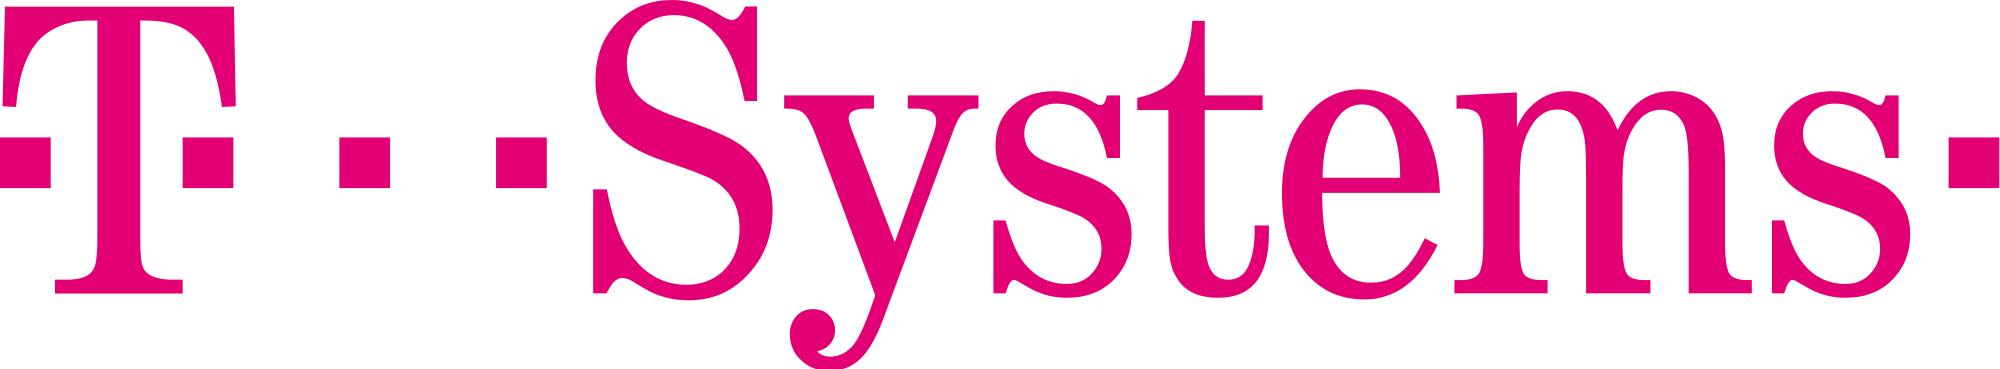 T-Systems International logo